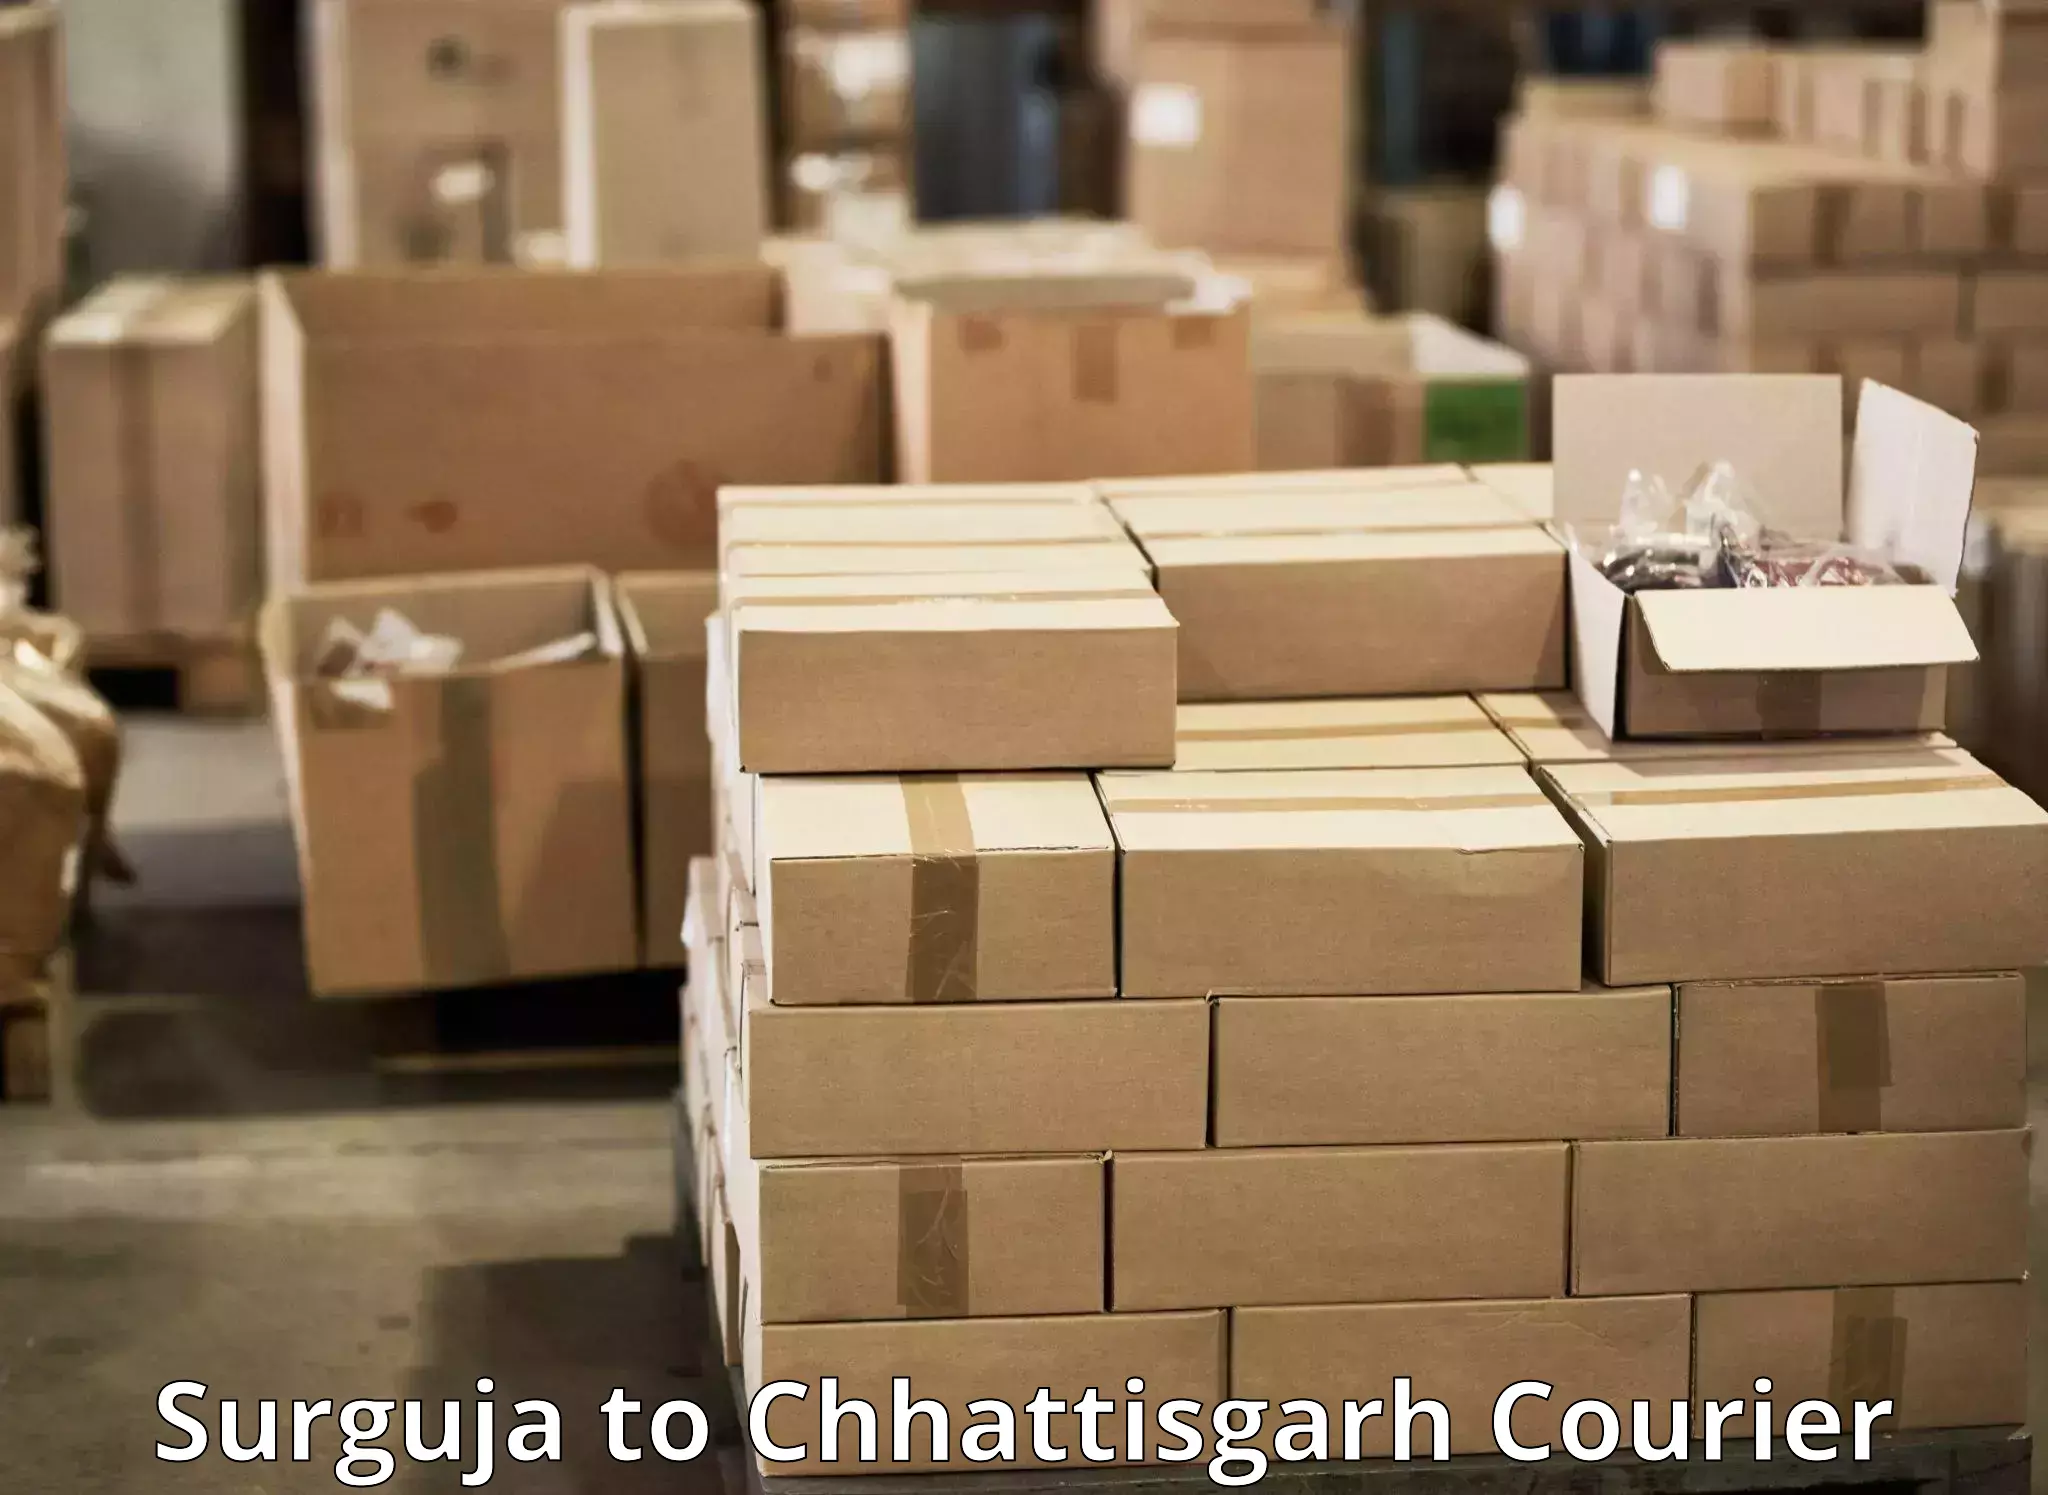 Courier service partnerships Surguja to Bijapur Chhattisgarh